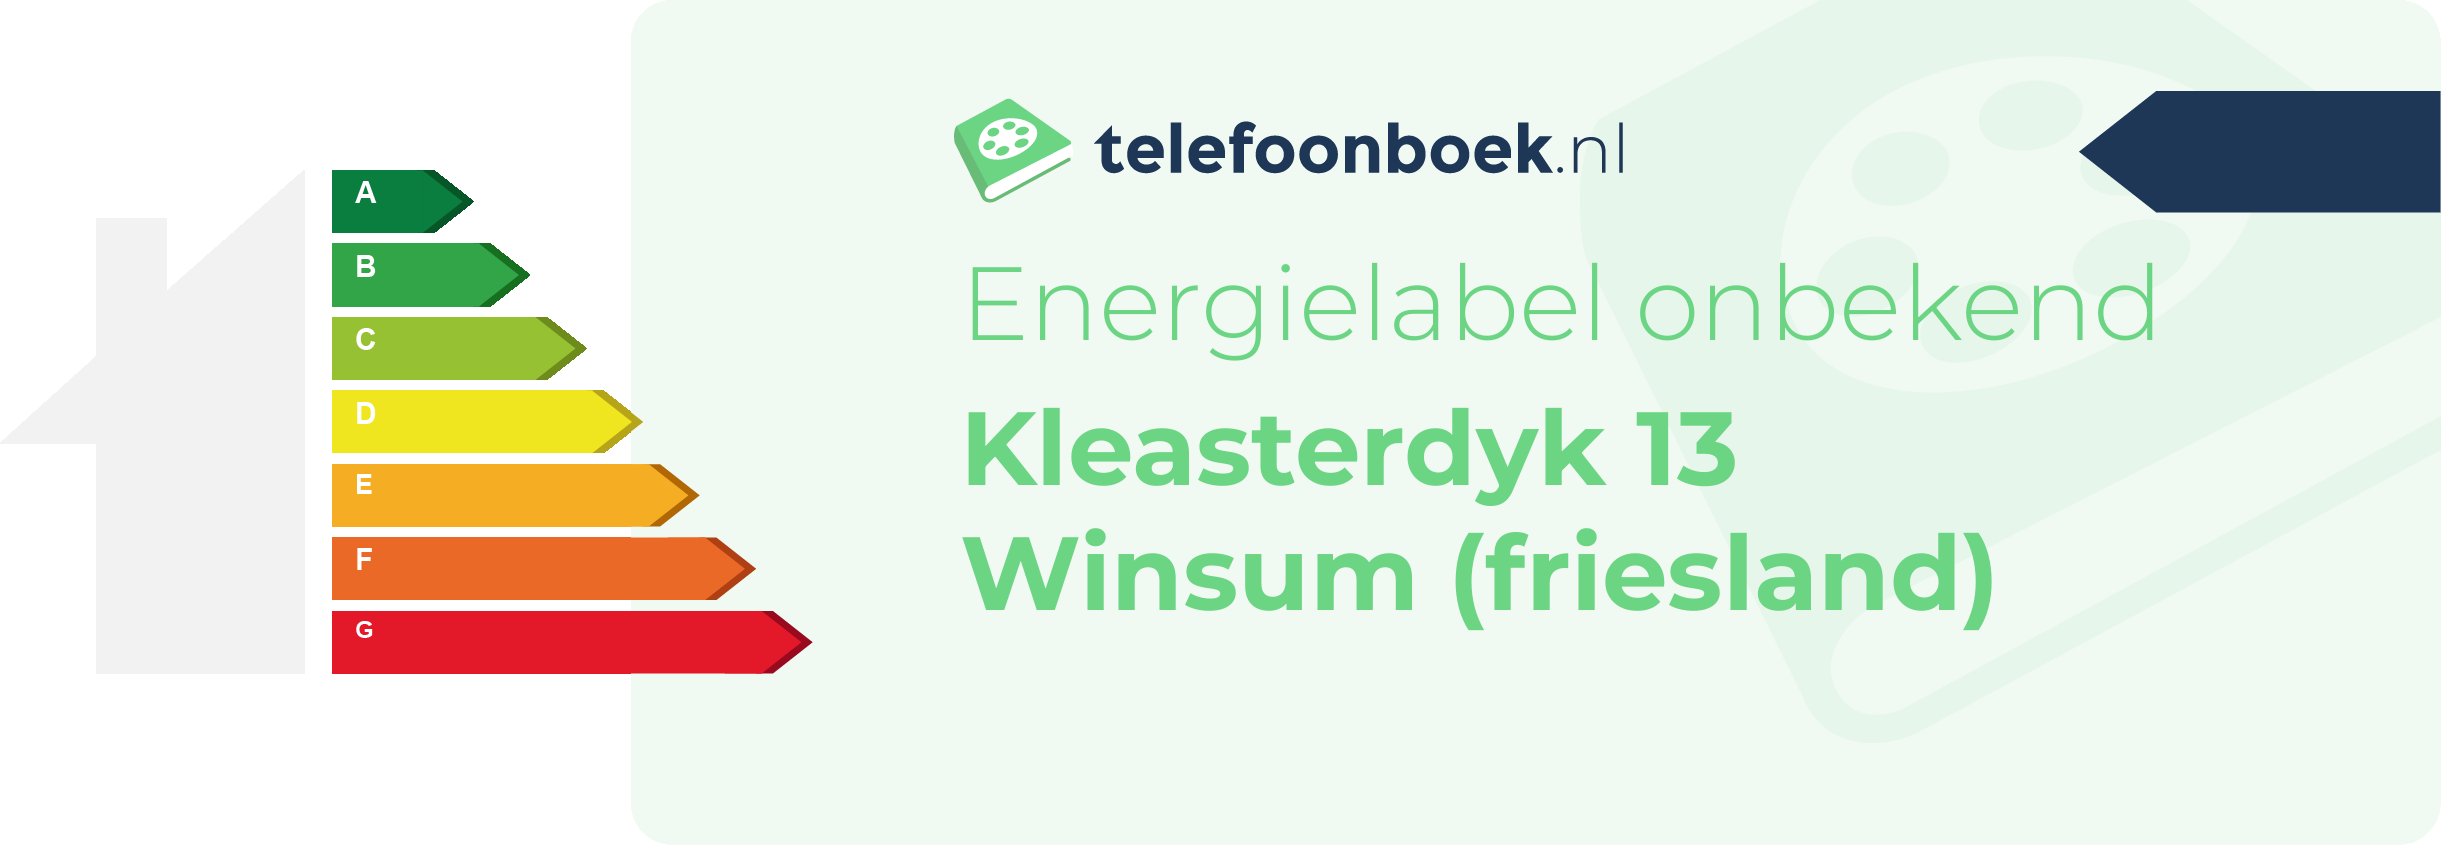 Energielabel Kleasterdyk 13 Winsum (Friesland)